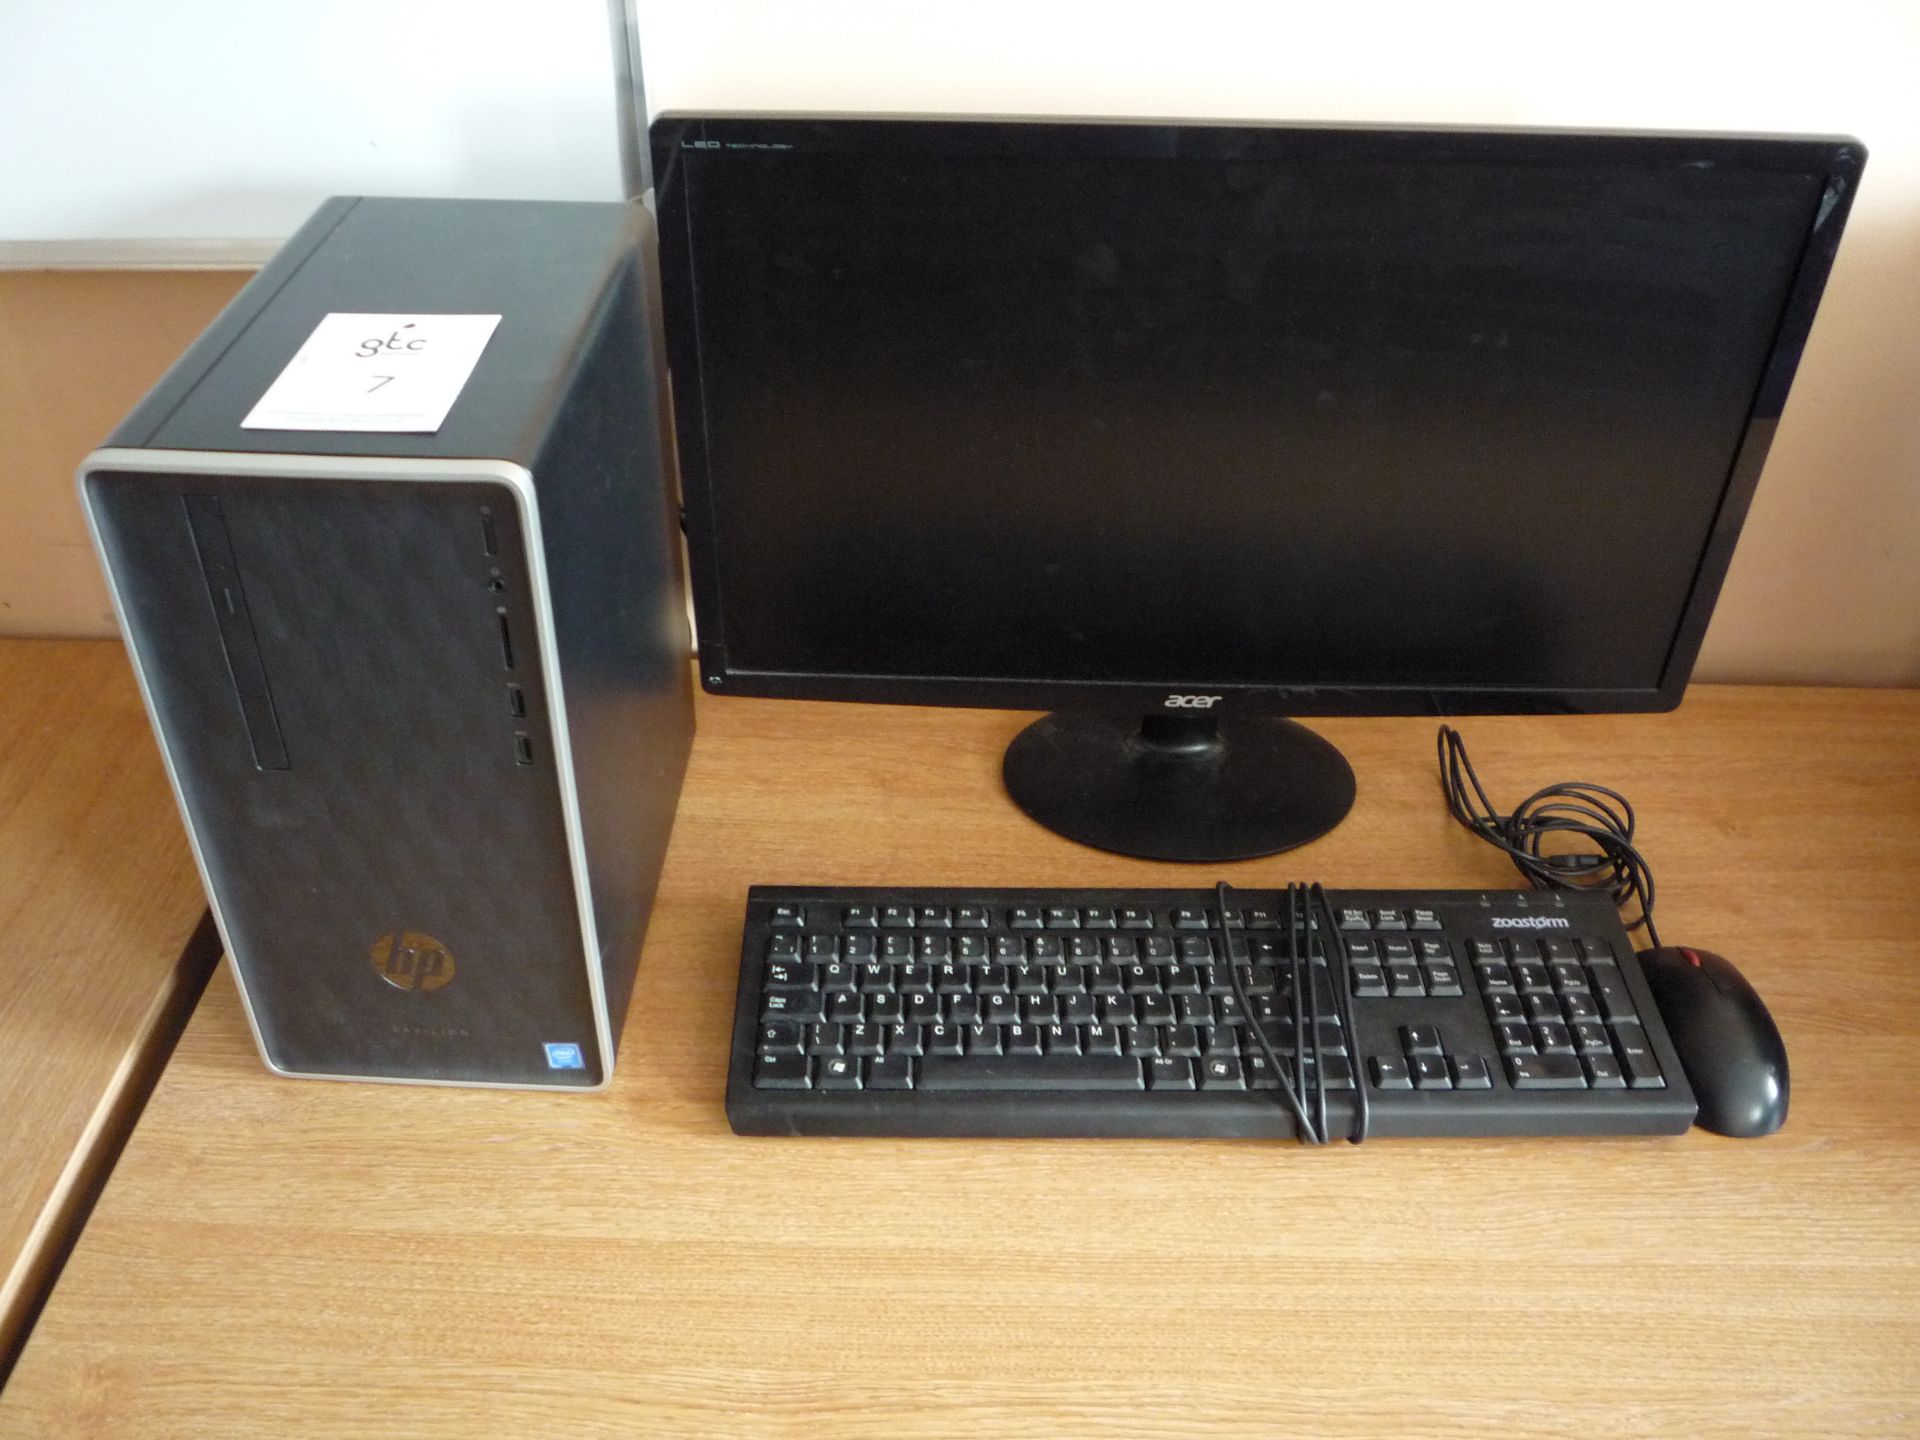 HP Pavilion PC, Acer Monitor & Keyboard - Image 2 of 2